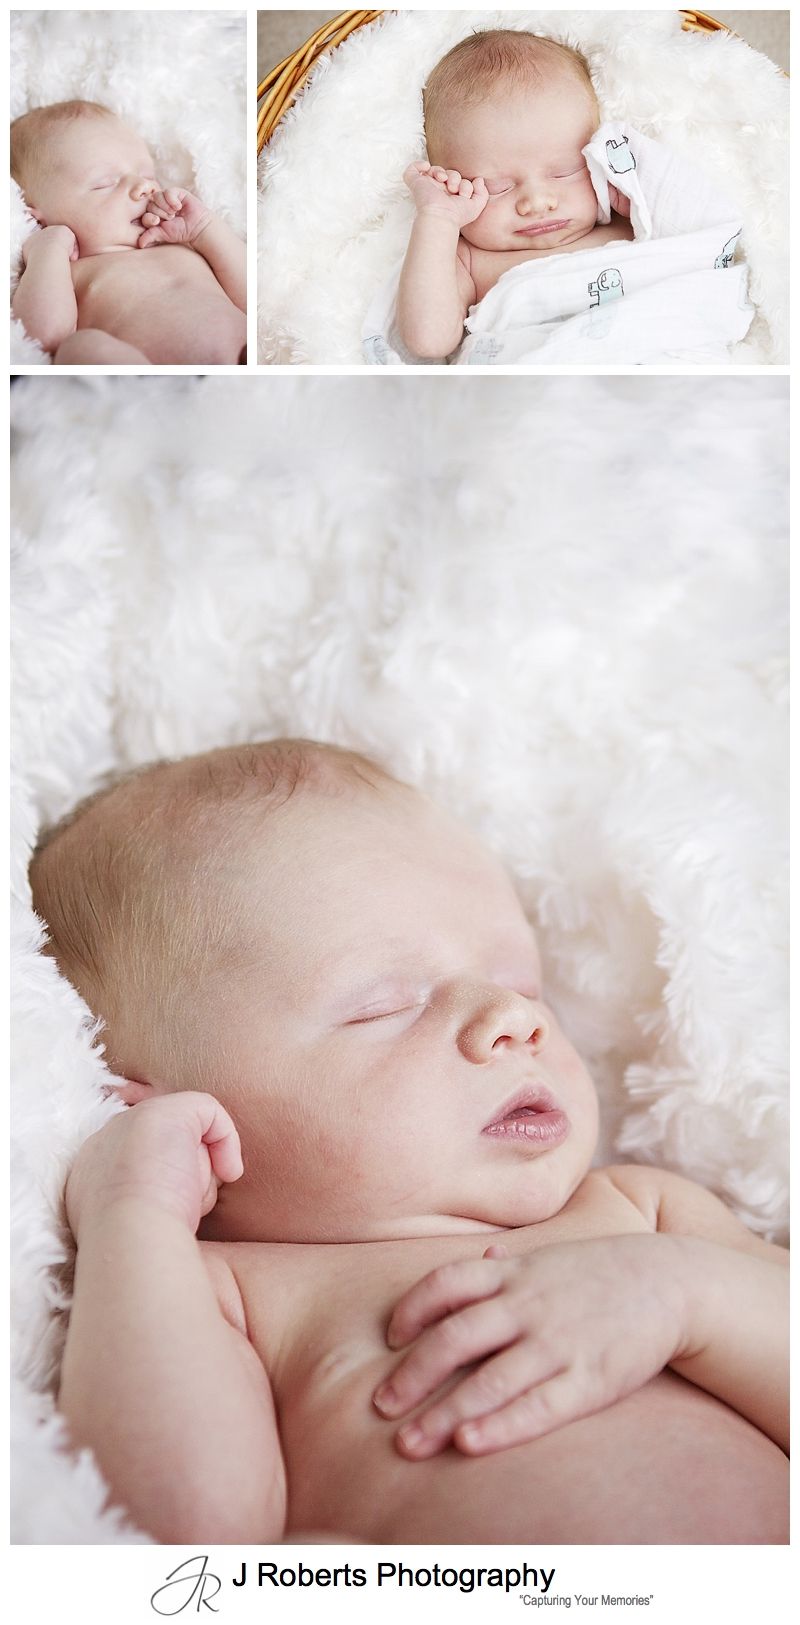 Baby portraits in a cosy basket - sydney newborn baby portrait photographer